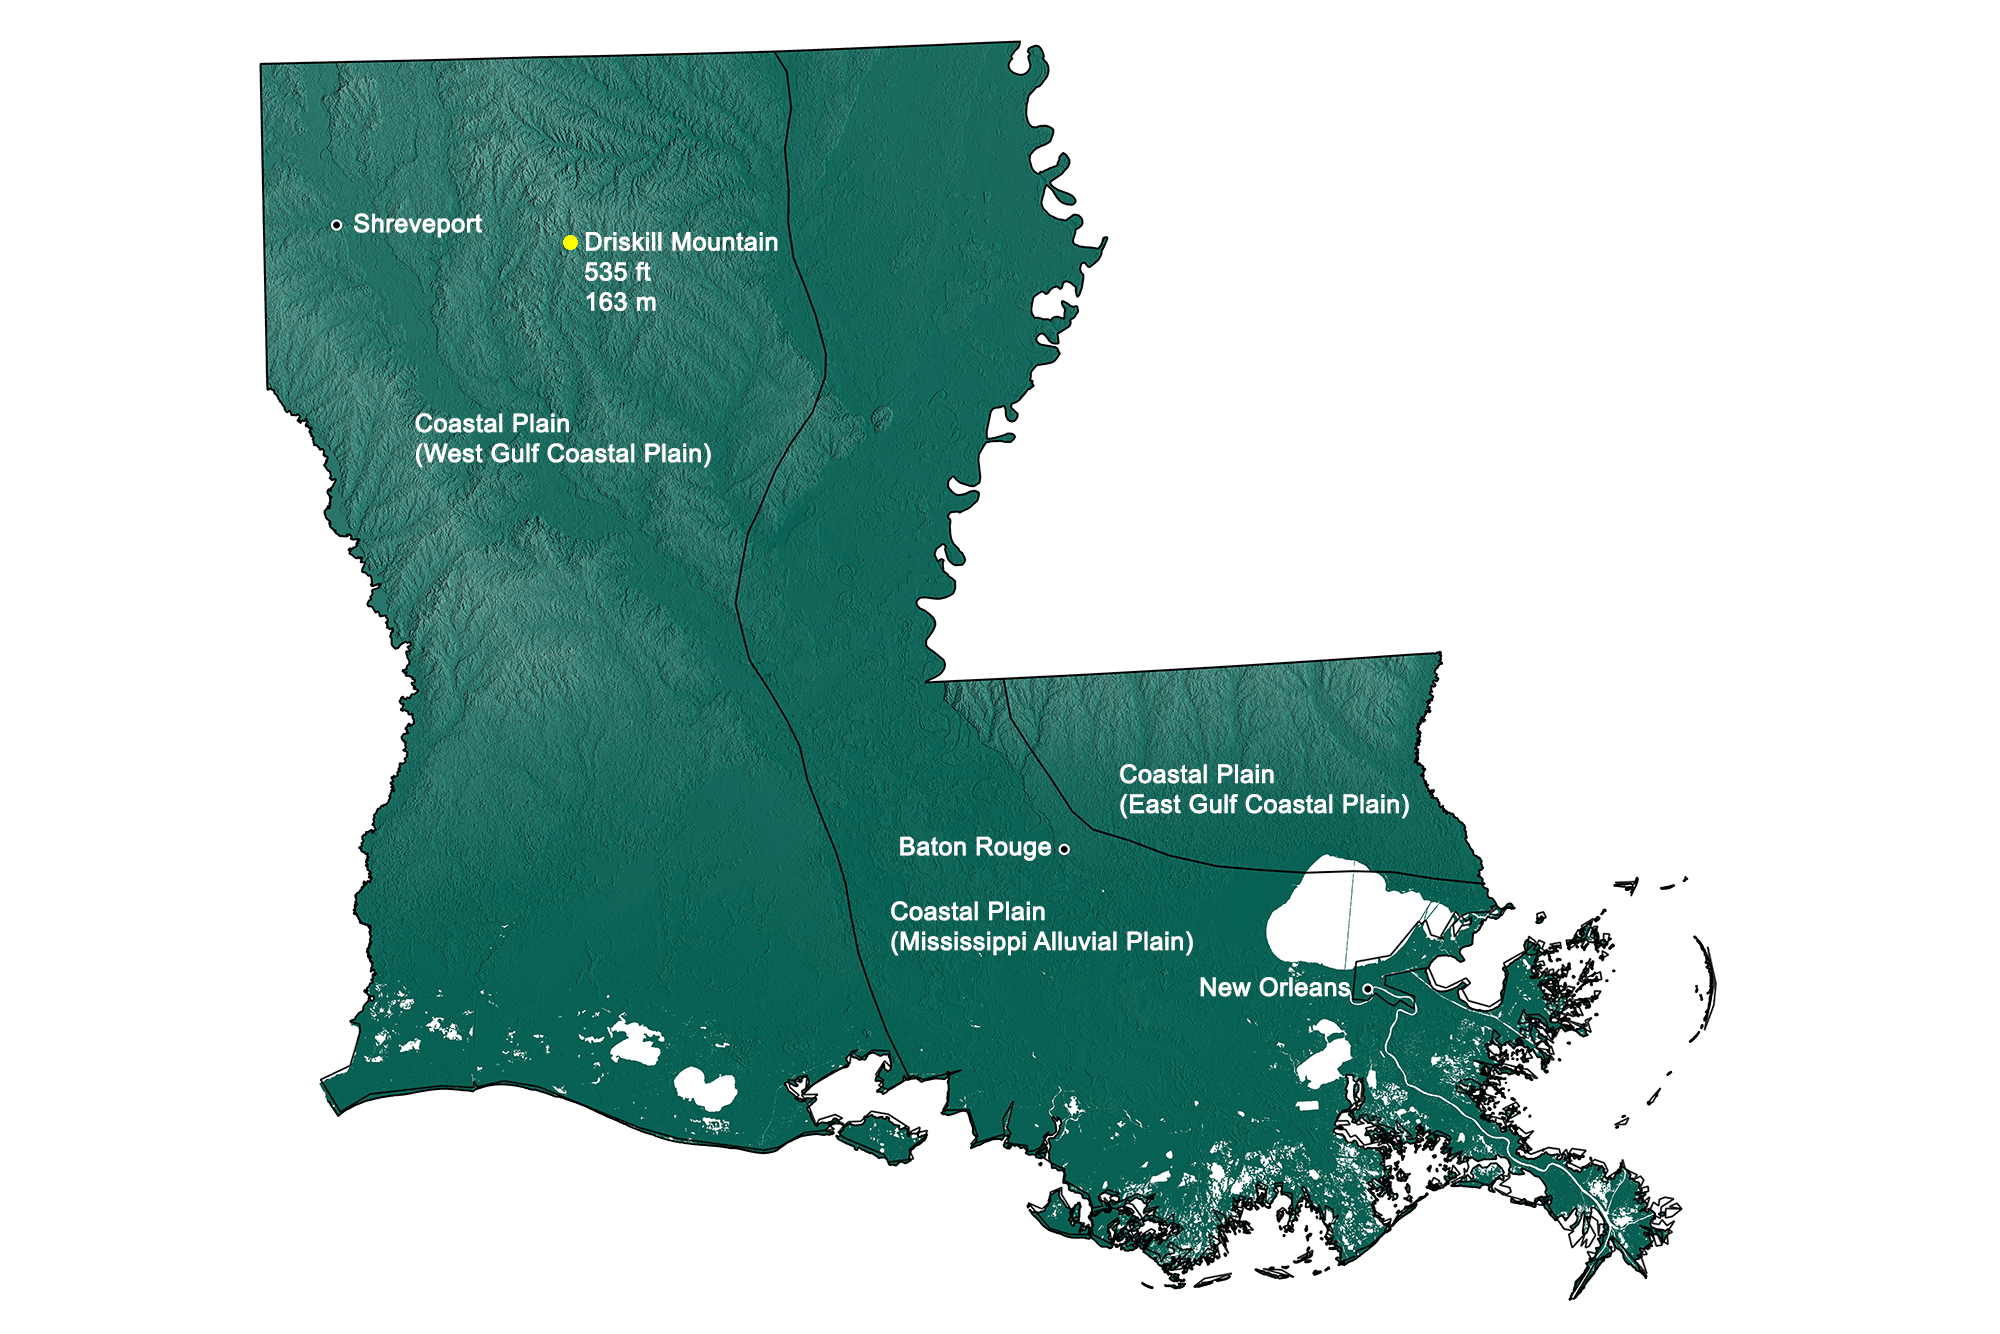 Topographic map of Louisiana.